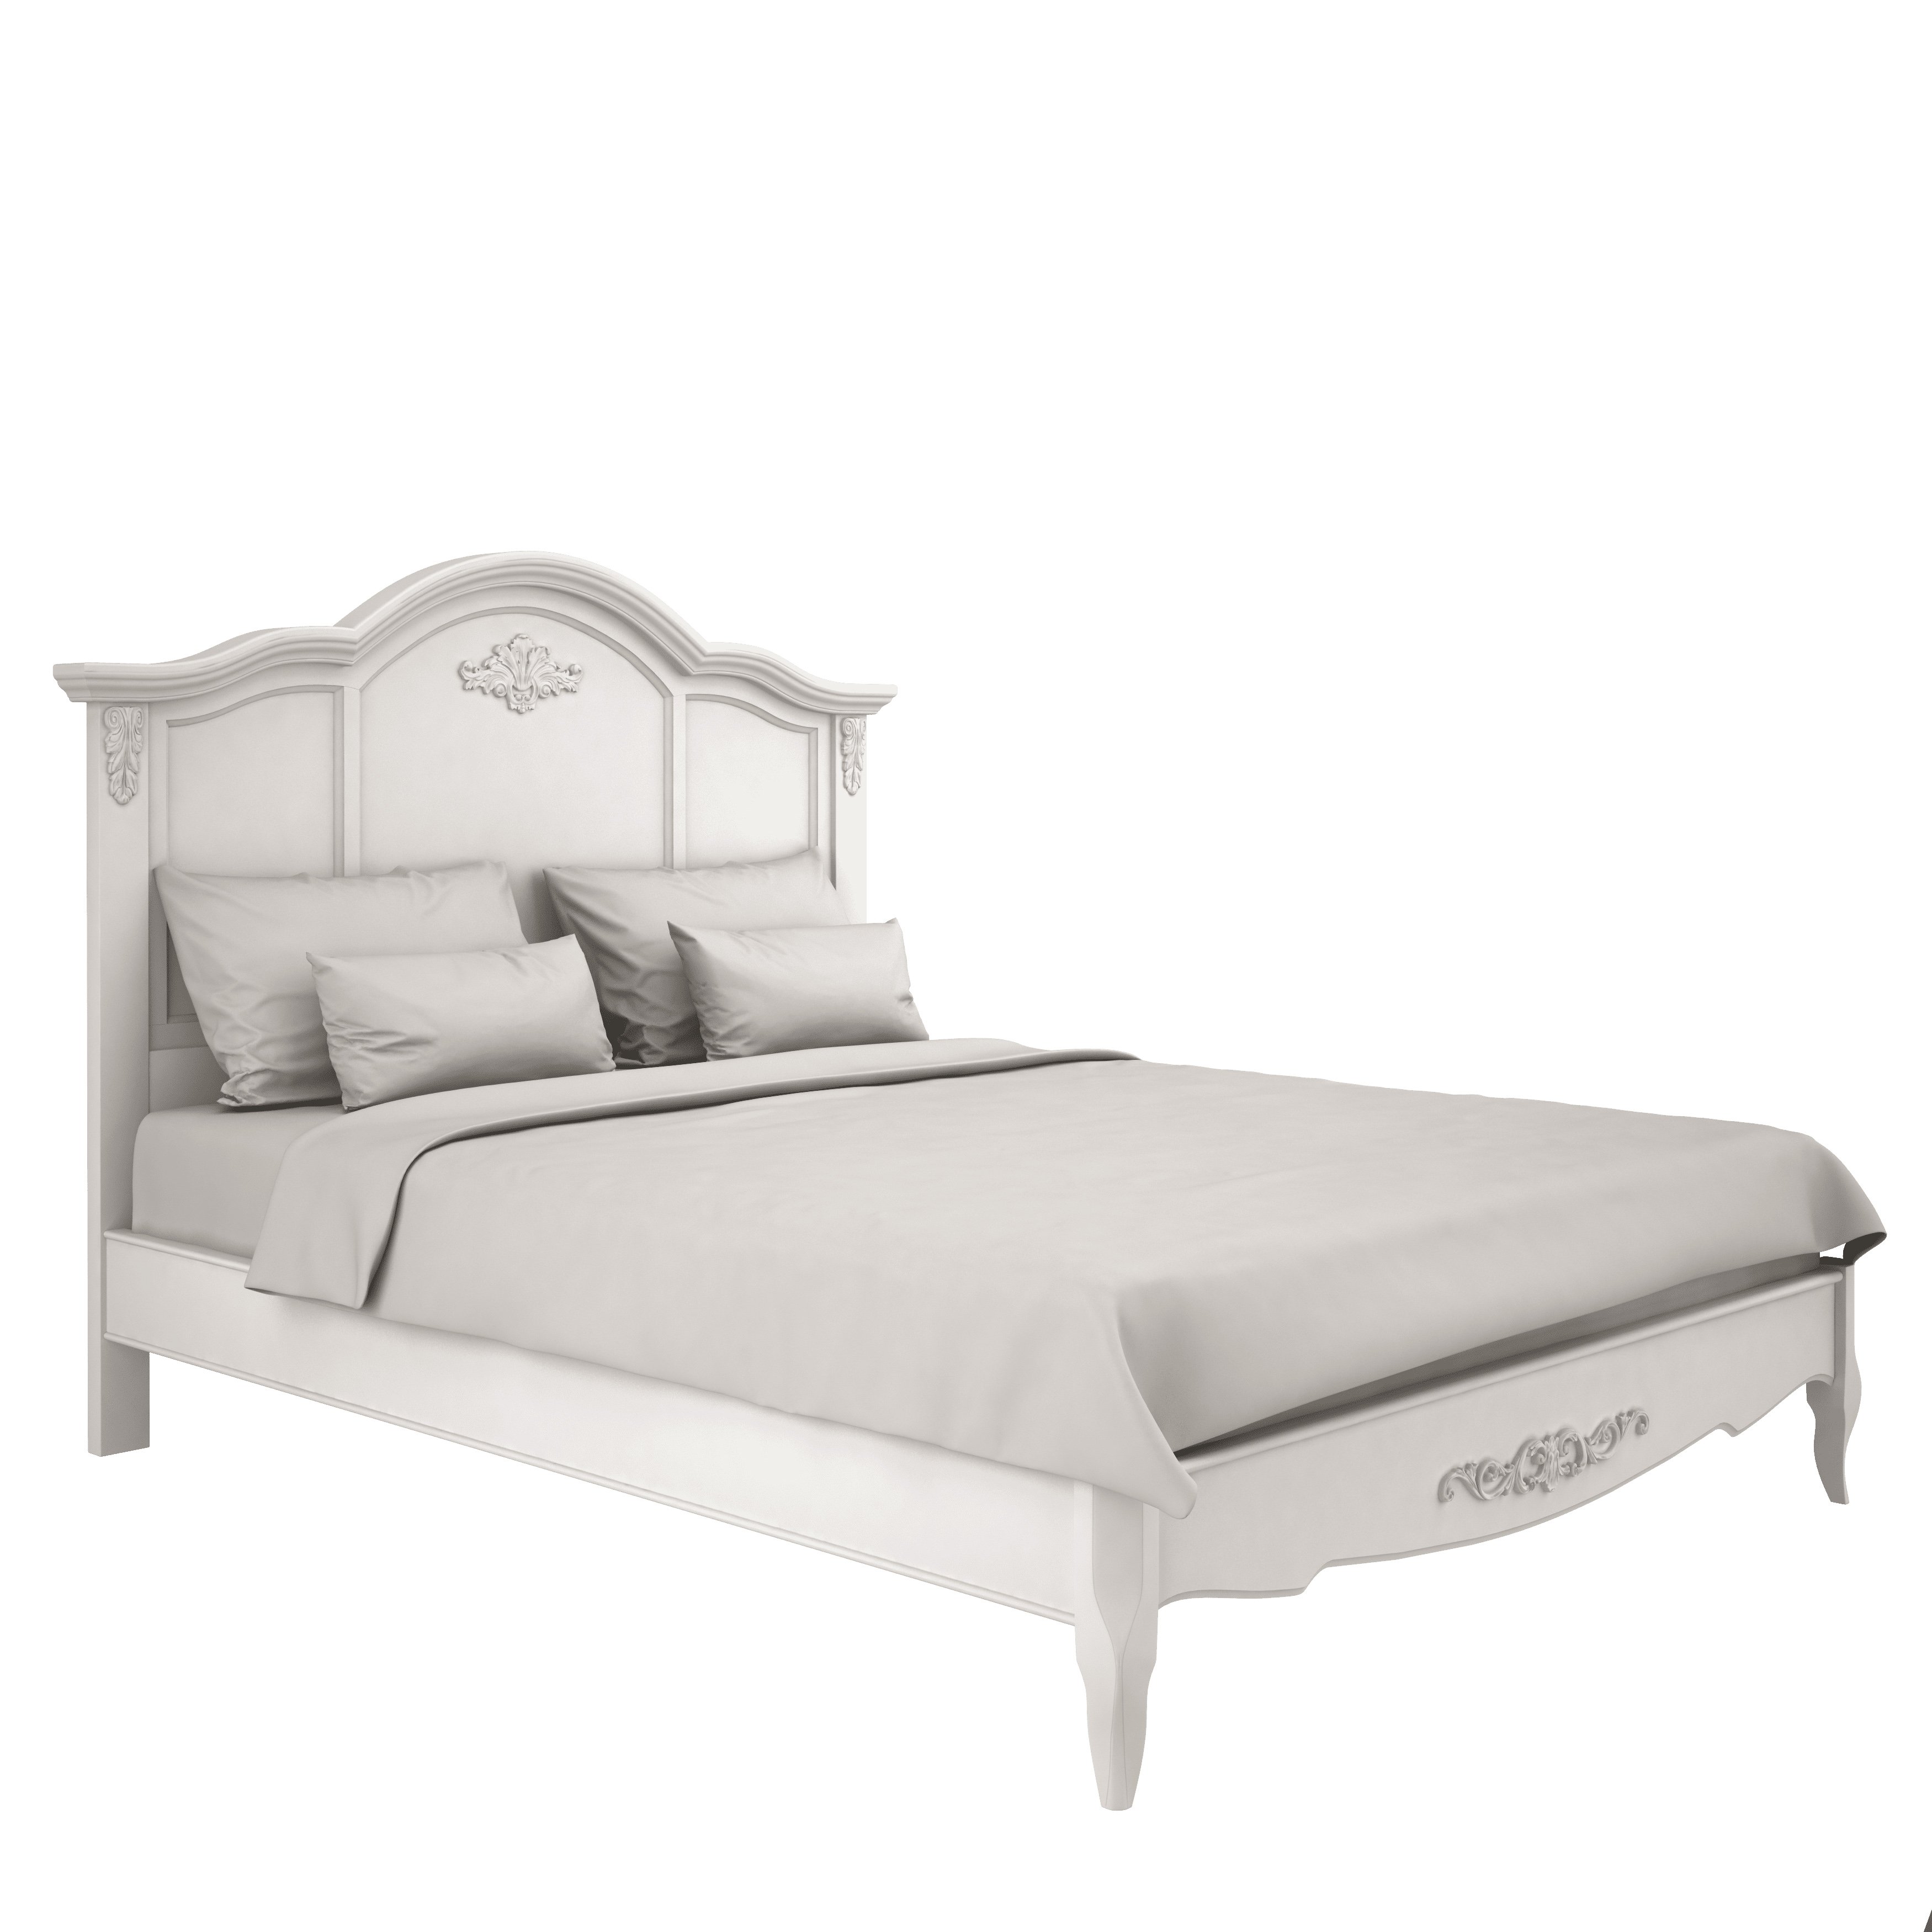 Кровать Aletan Provence, двуспальная, 180x200 см, цвет: слоновая кость, размер 198х211х129 см (B208)B208